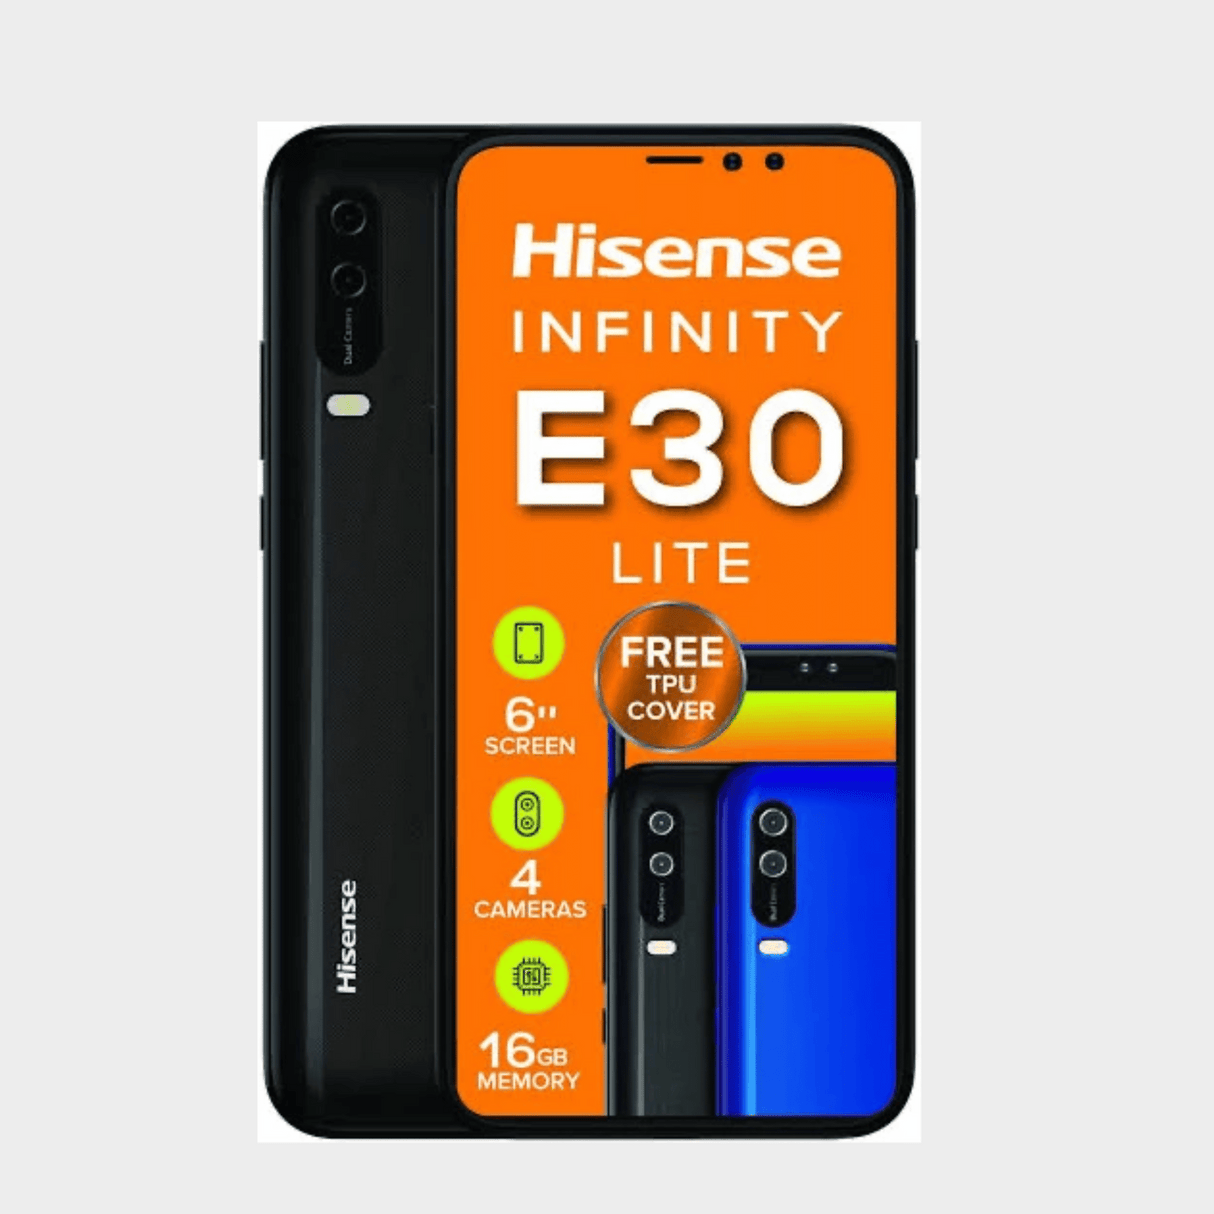 Hisense Infinity 6” Display Smart Phone, 3000 mAh Battery, Android 9, 8MP + 2MP Camera - E30 Lite